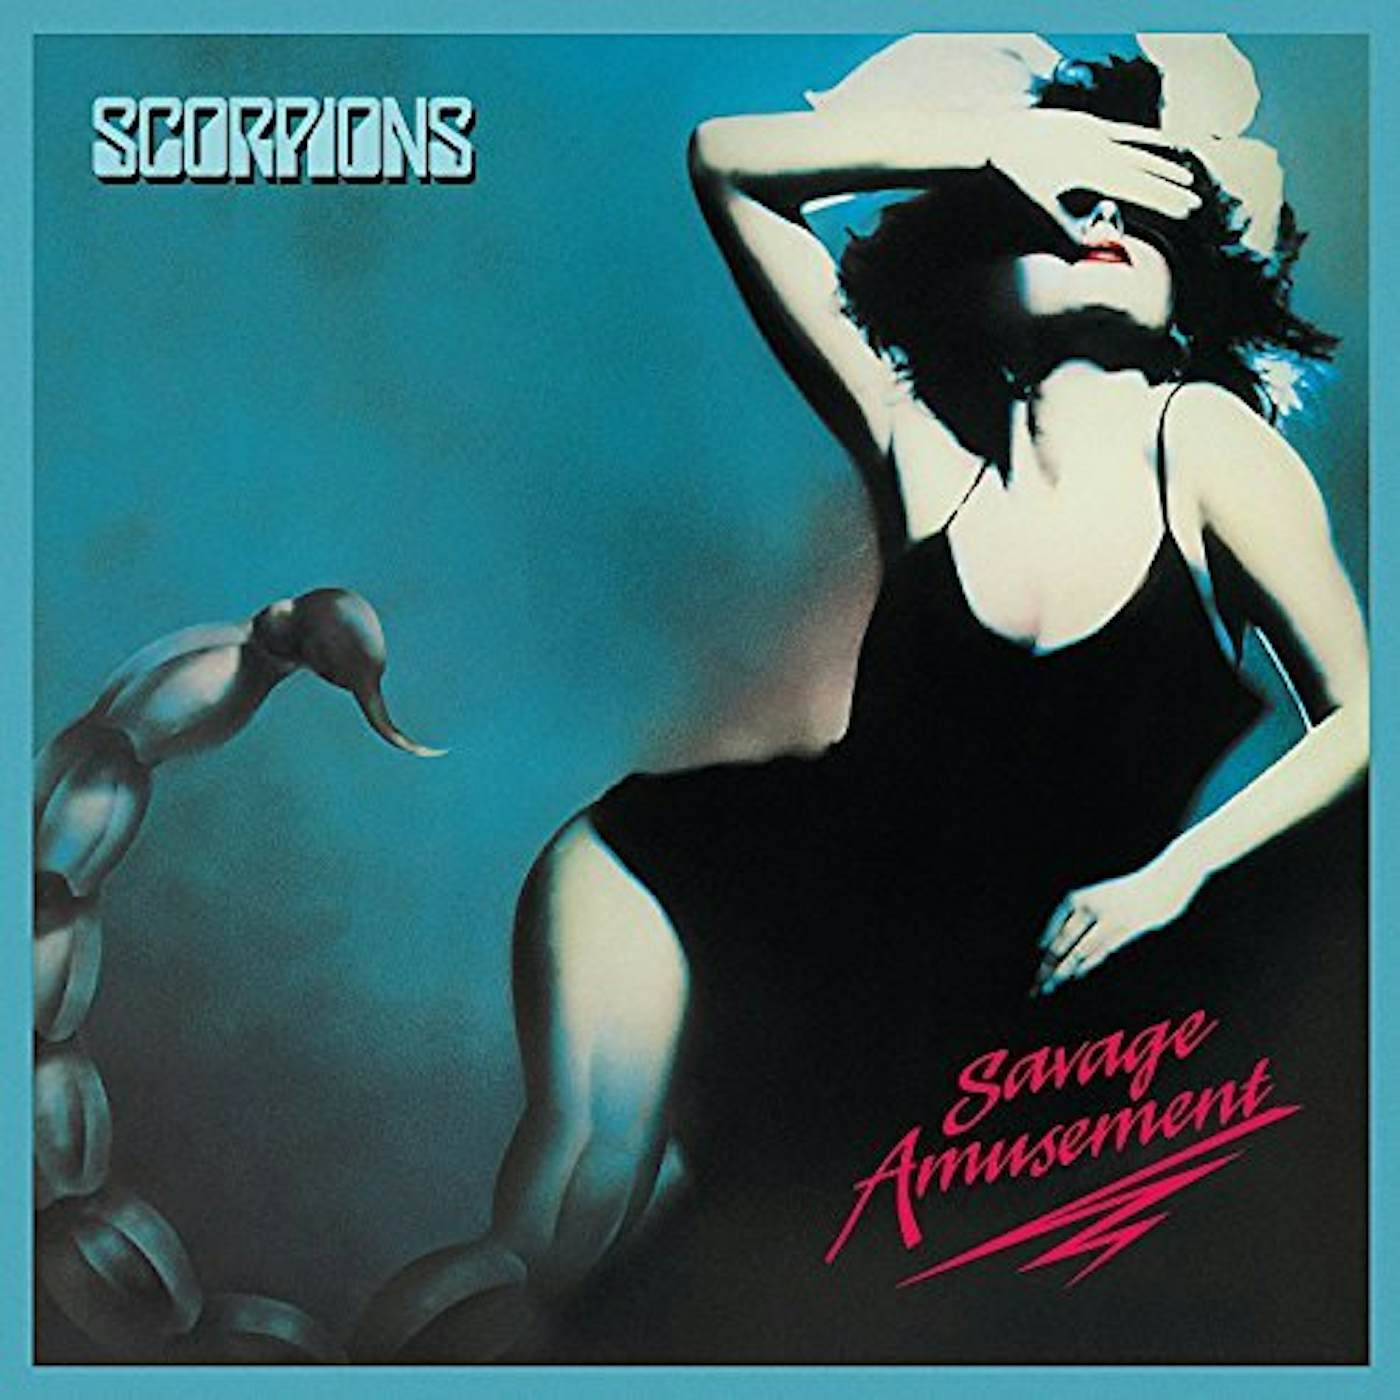 Scorpions SAVAGE AMUSEMENT: 50TH BAND ANNIVERSARY CD